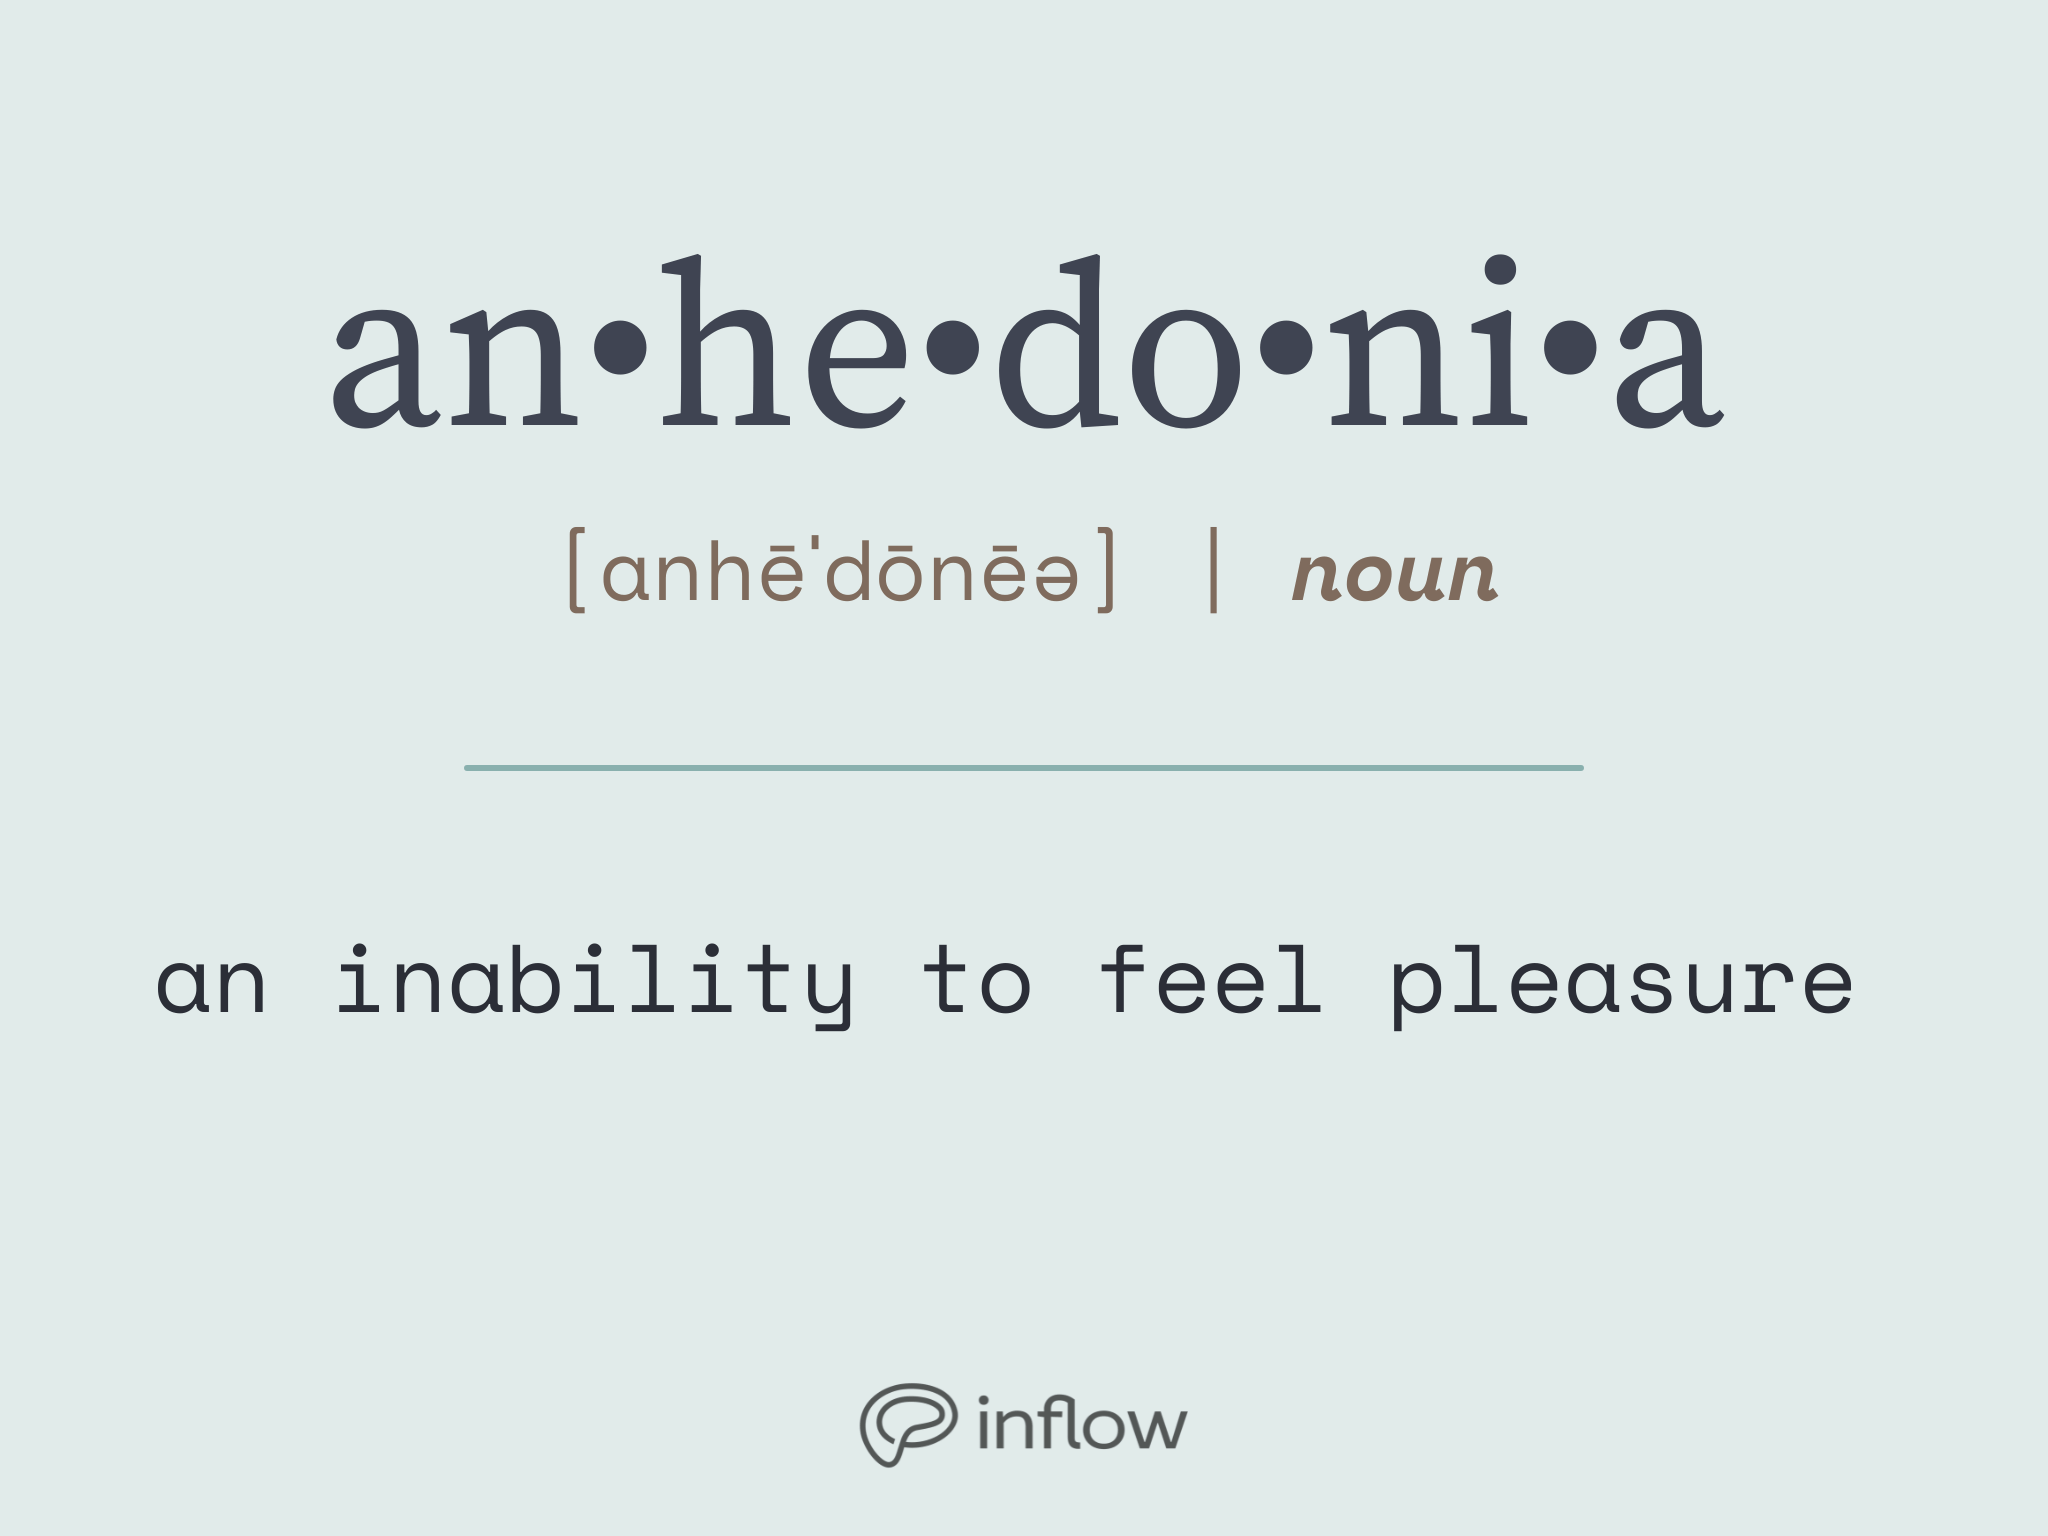 anhedonia, noun. an inability to feel pleasure